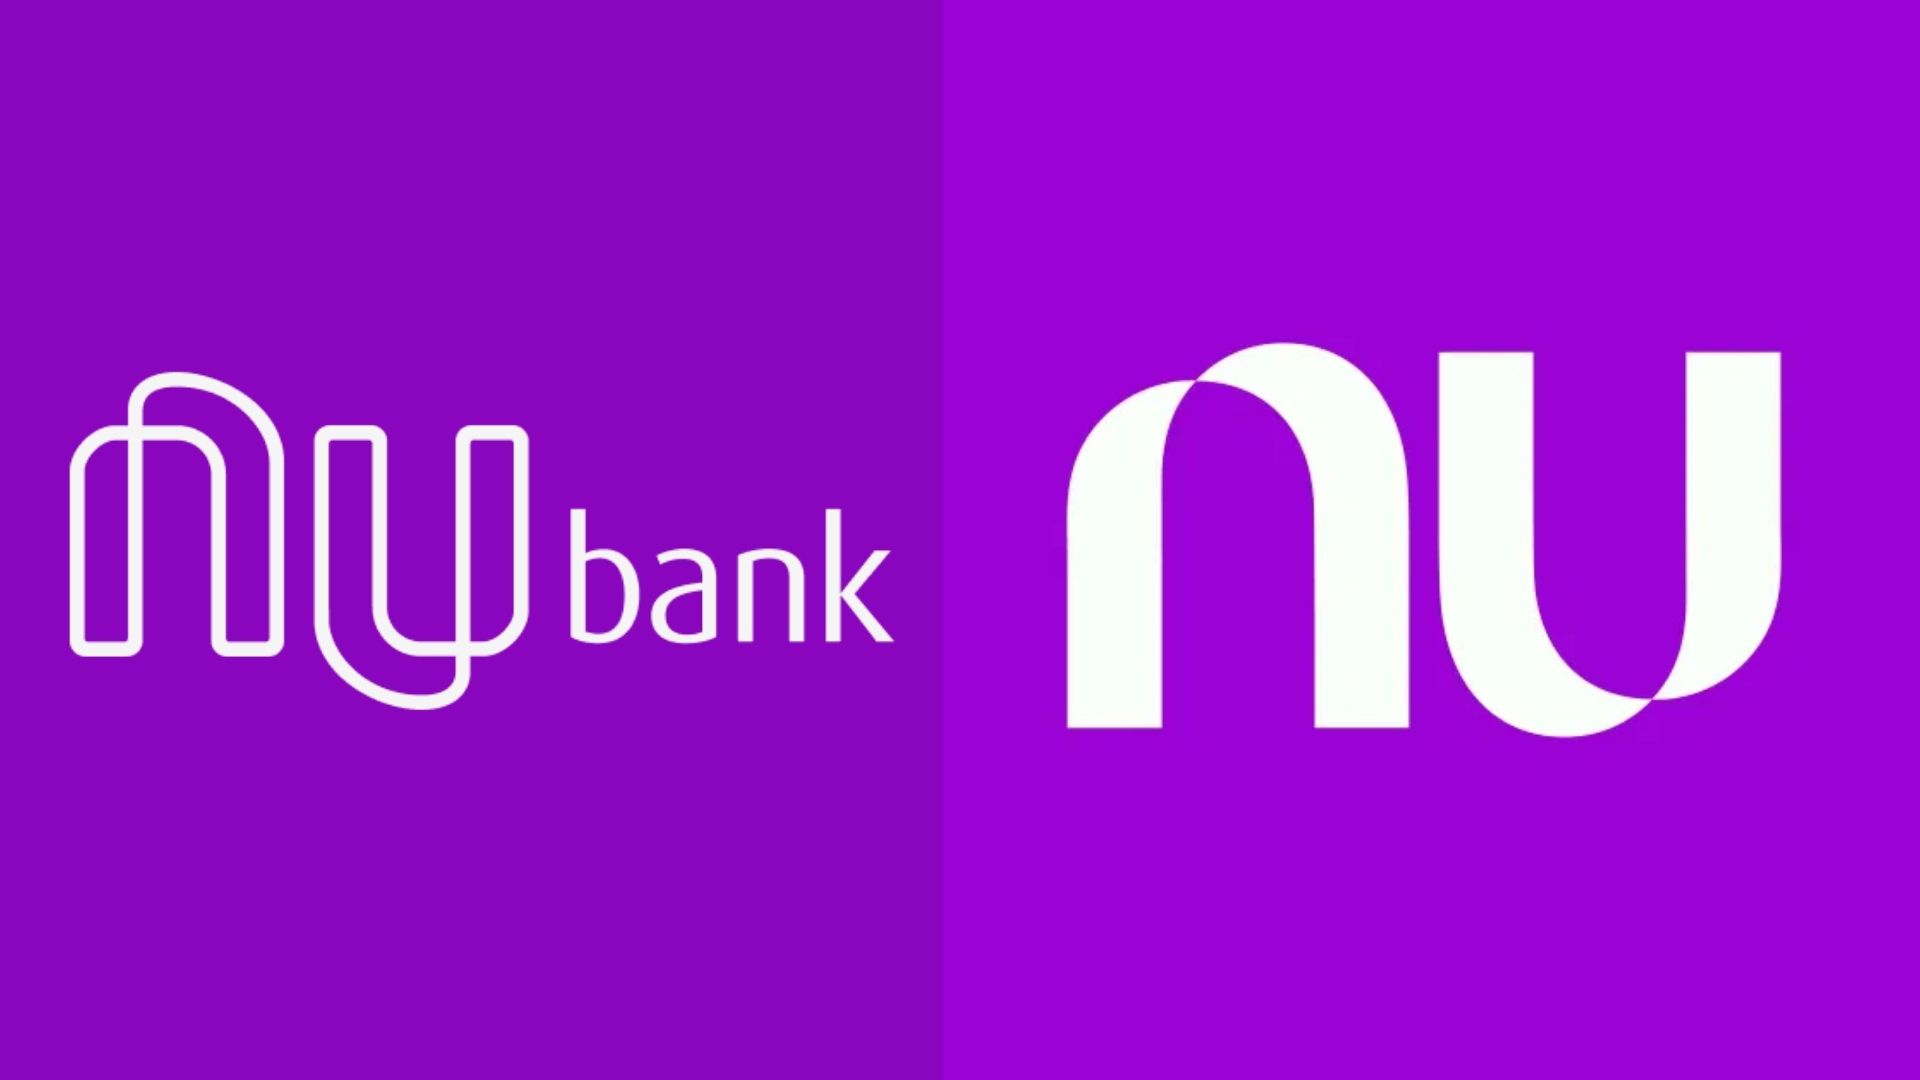 Nubank anuncia novo logo minimalista